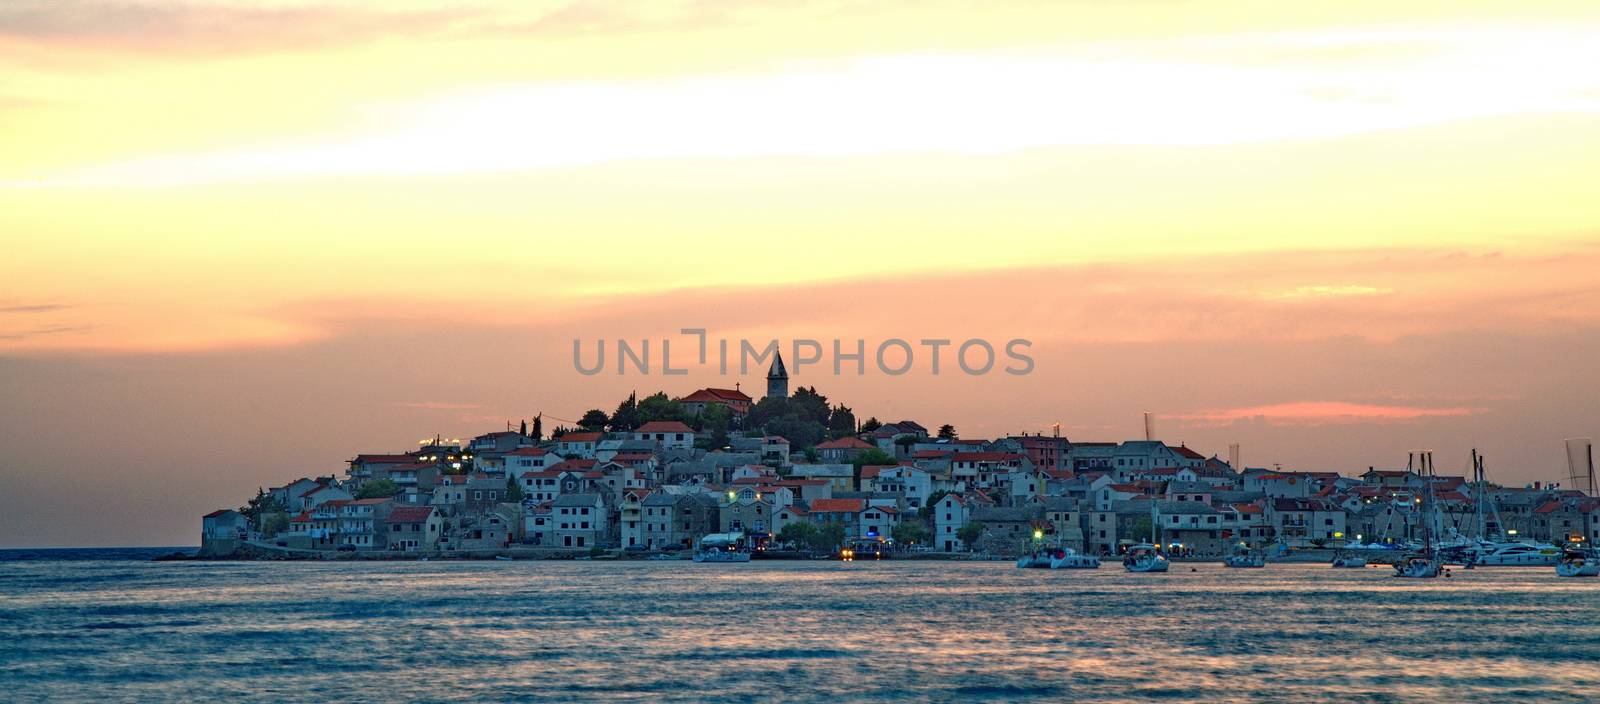 City of Primosten in Croatia at sunset